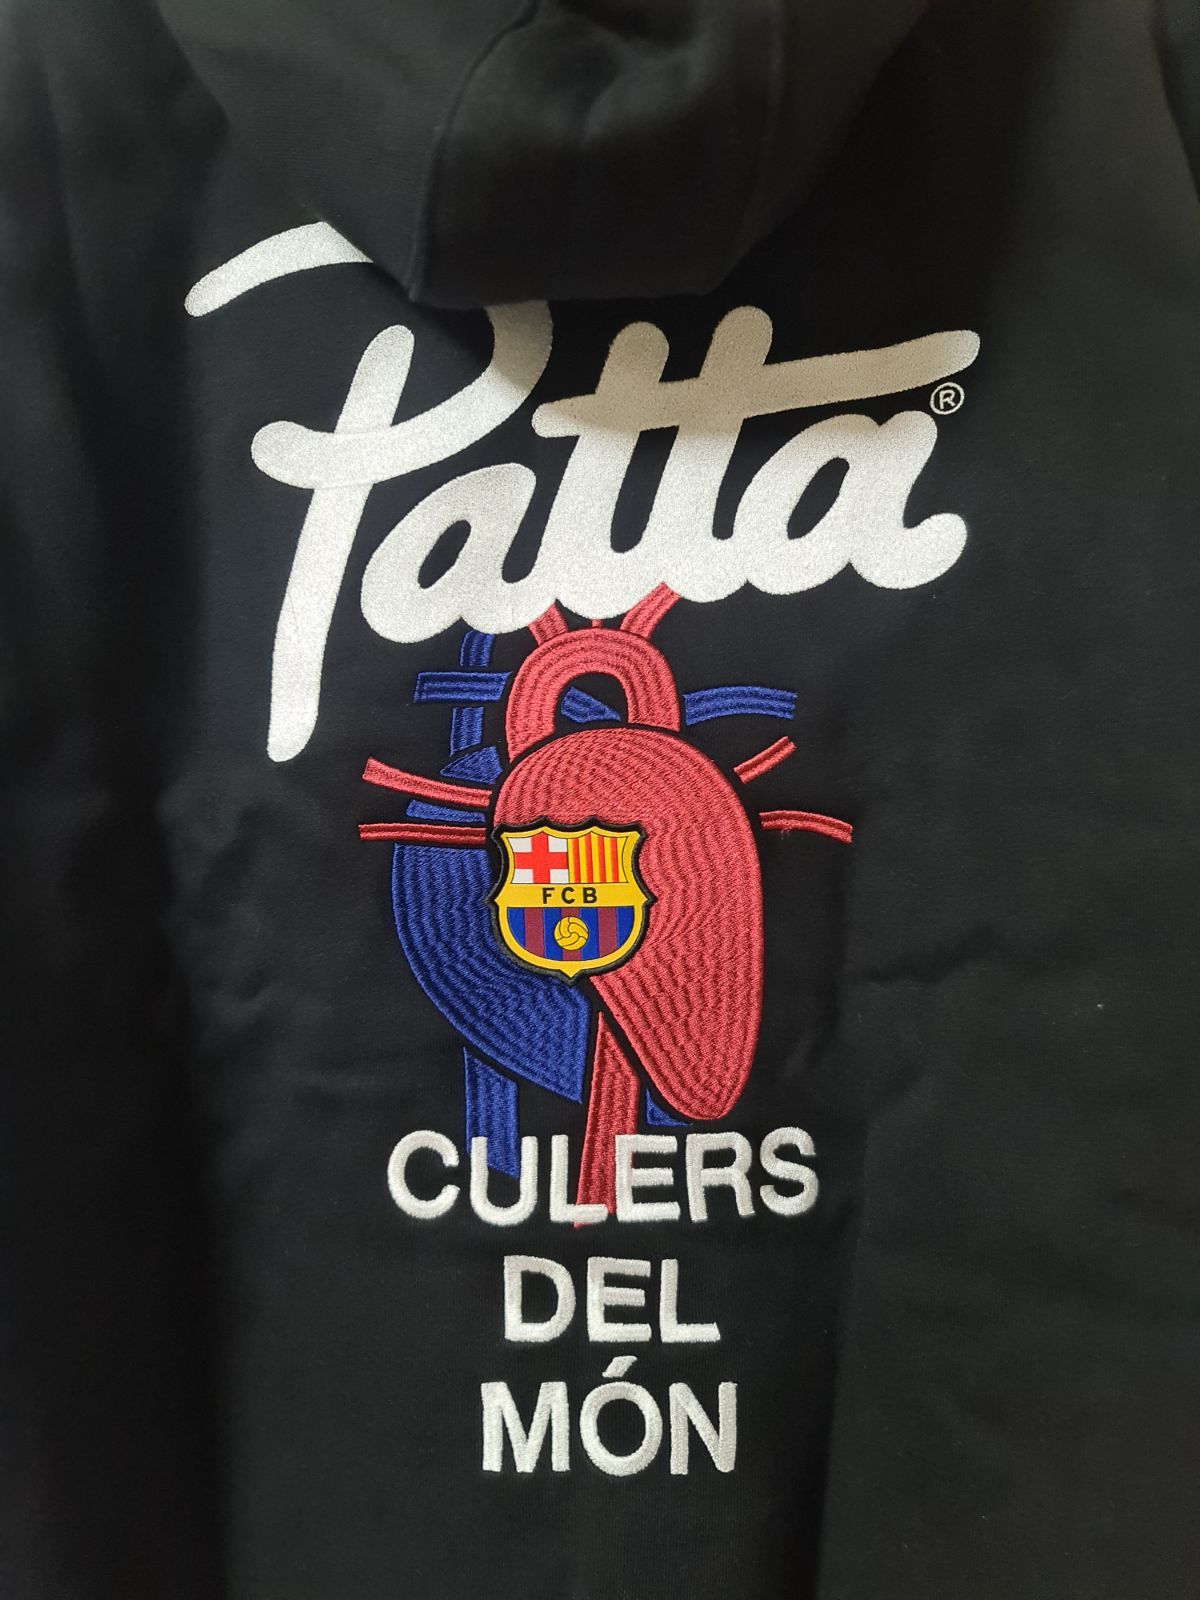 Nike FC Barcelona Patta Culers del Món パーカー ナイキ バルセロナ パタ フーディー